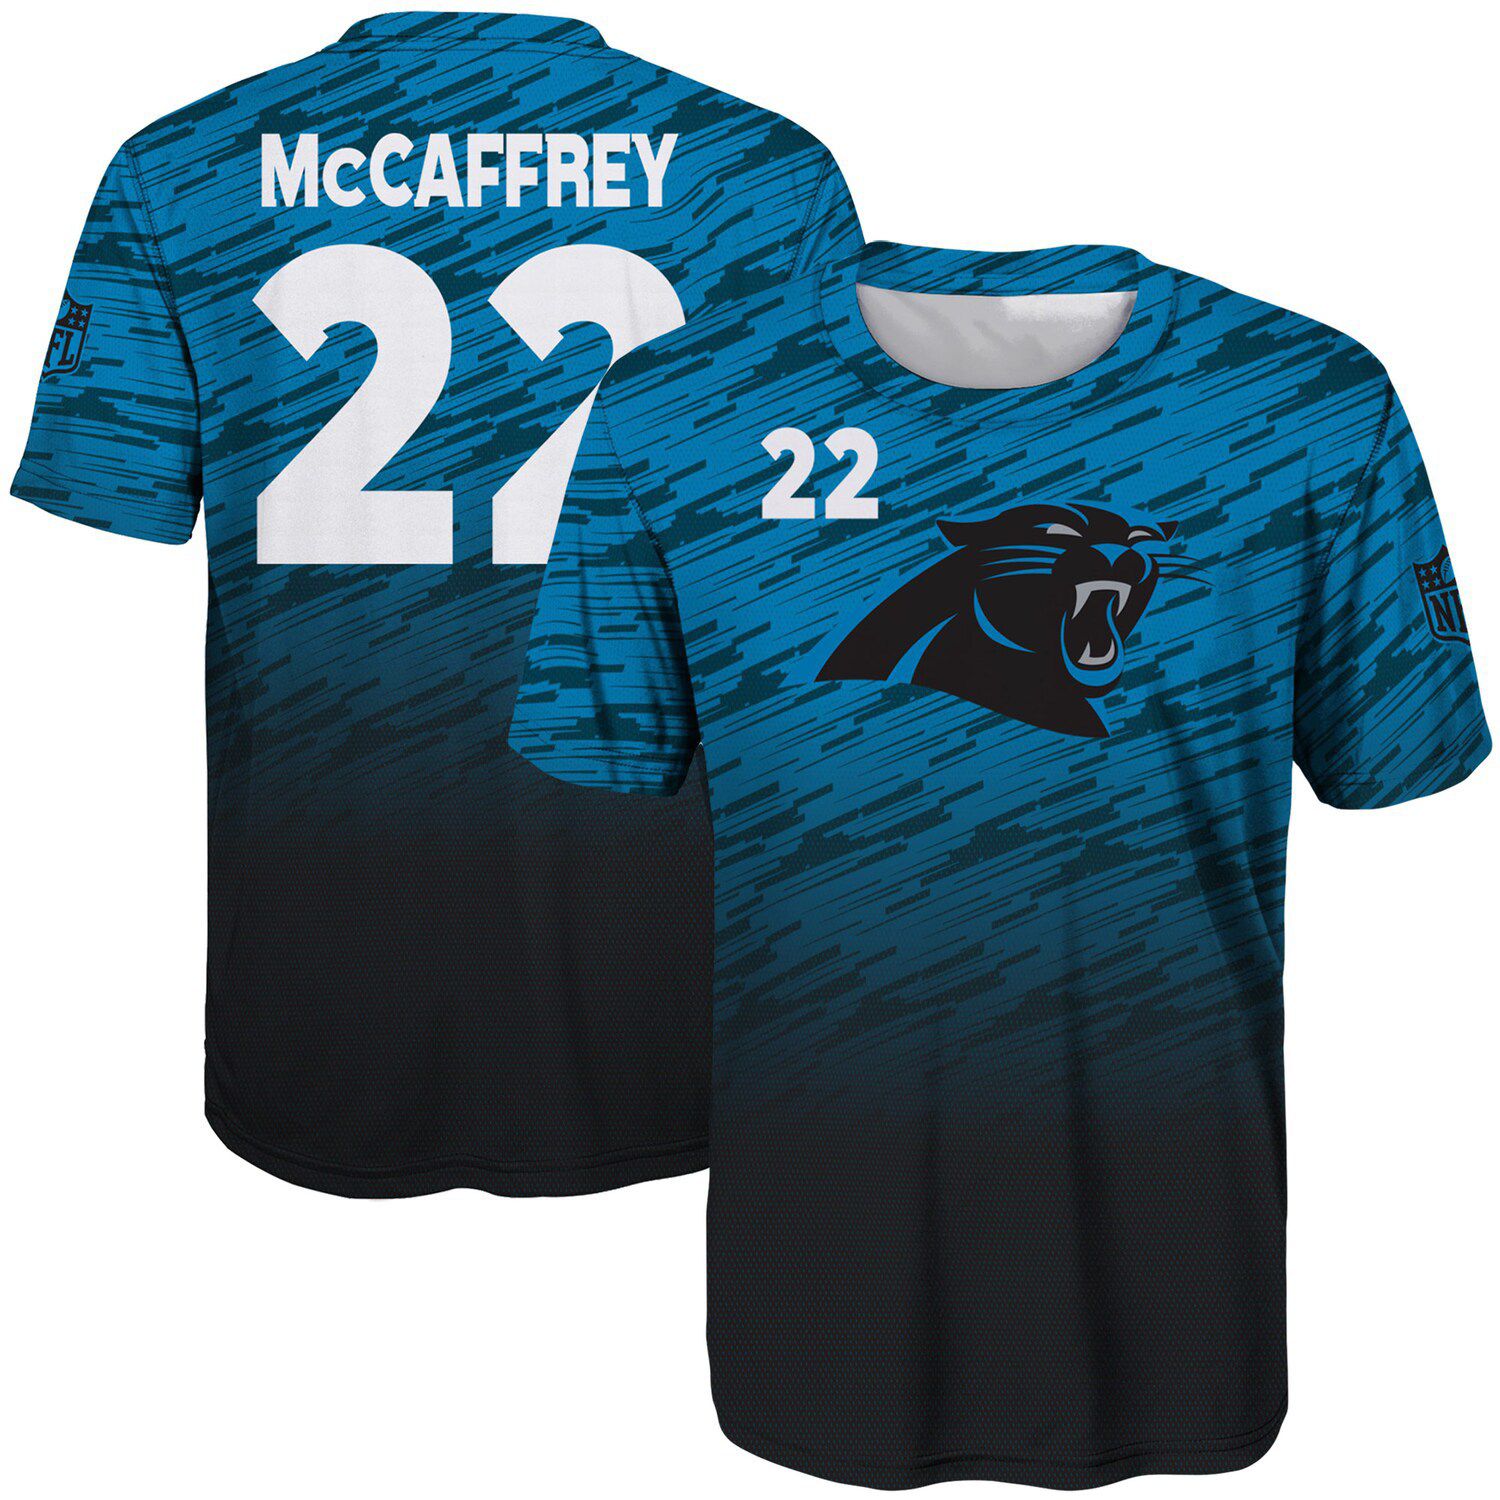 mccaffrey blue jersey